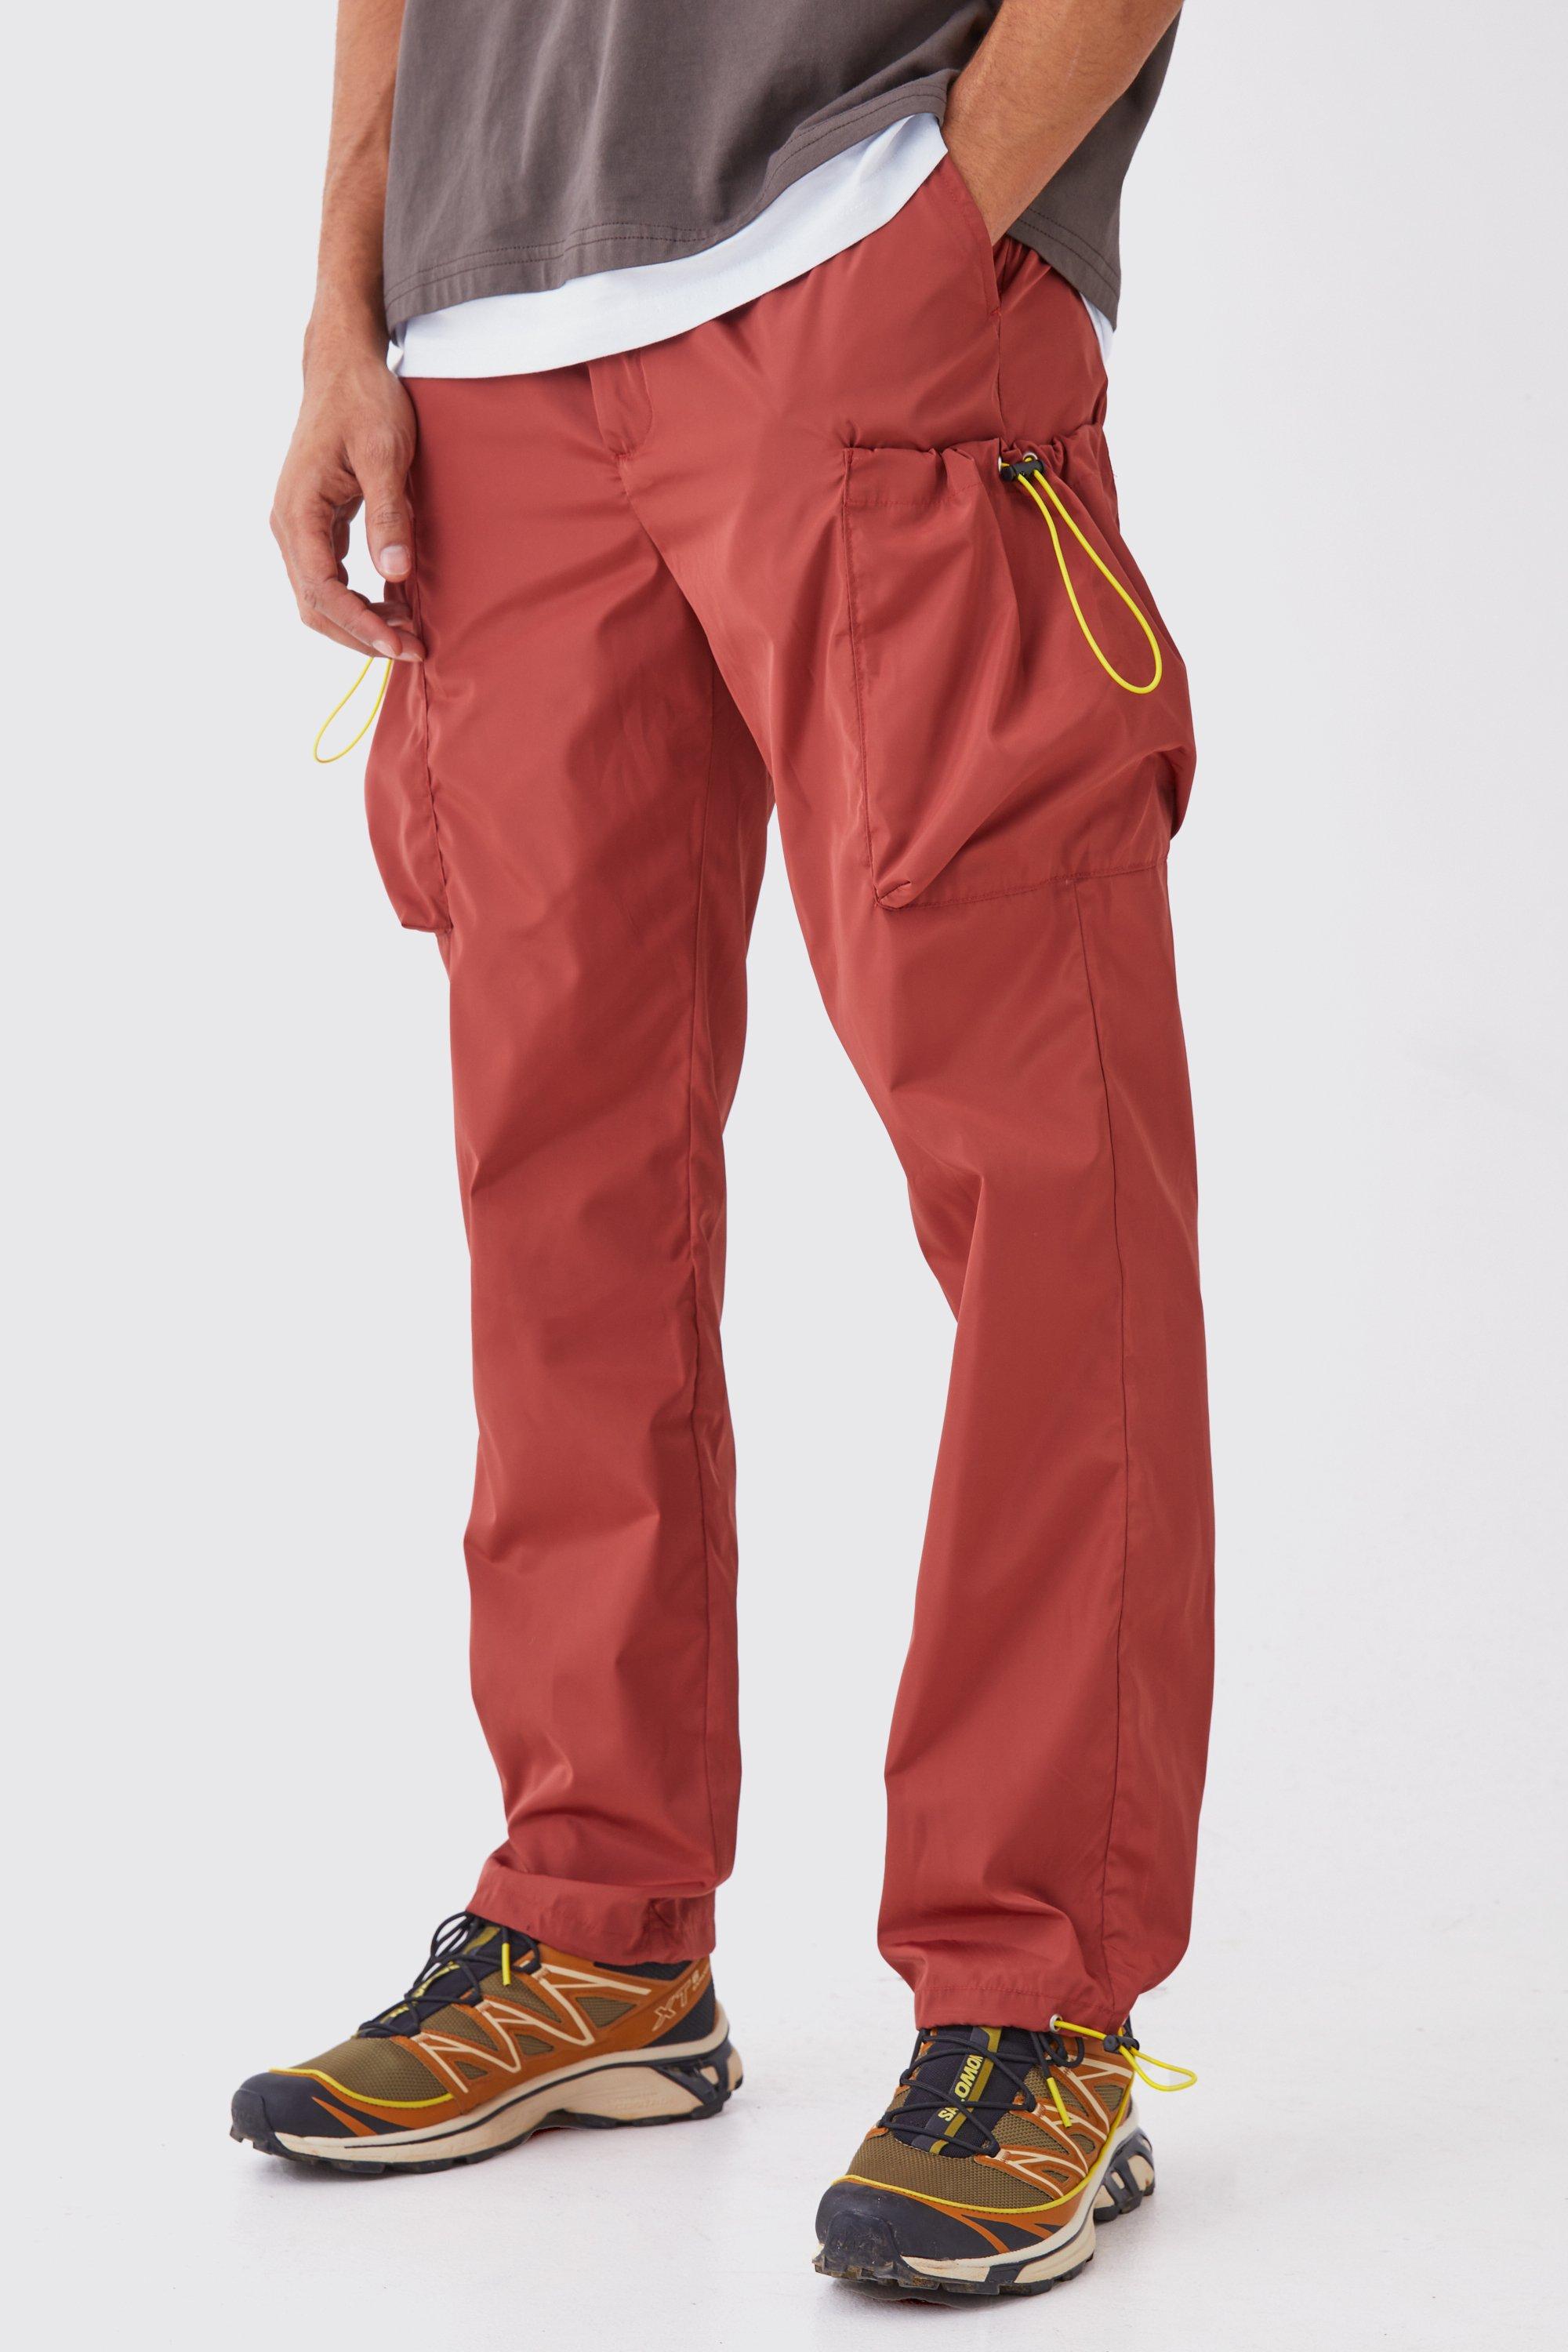 pantalon cargo droit en nylon homme - orange - 34r, orange